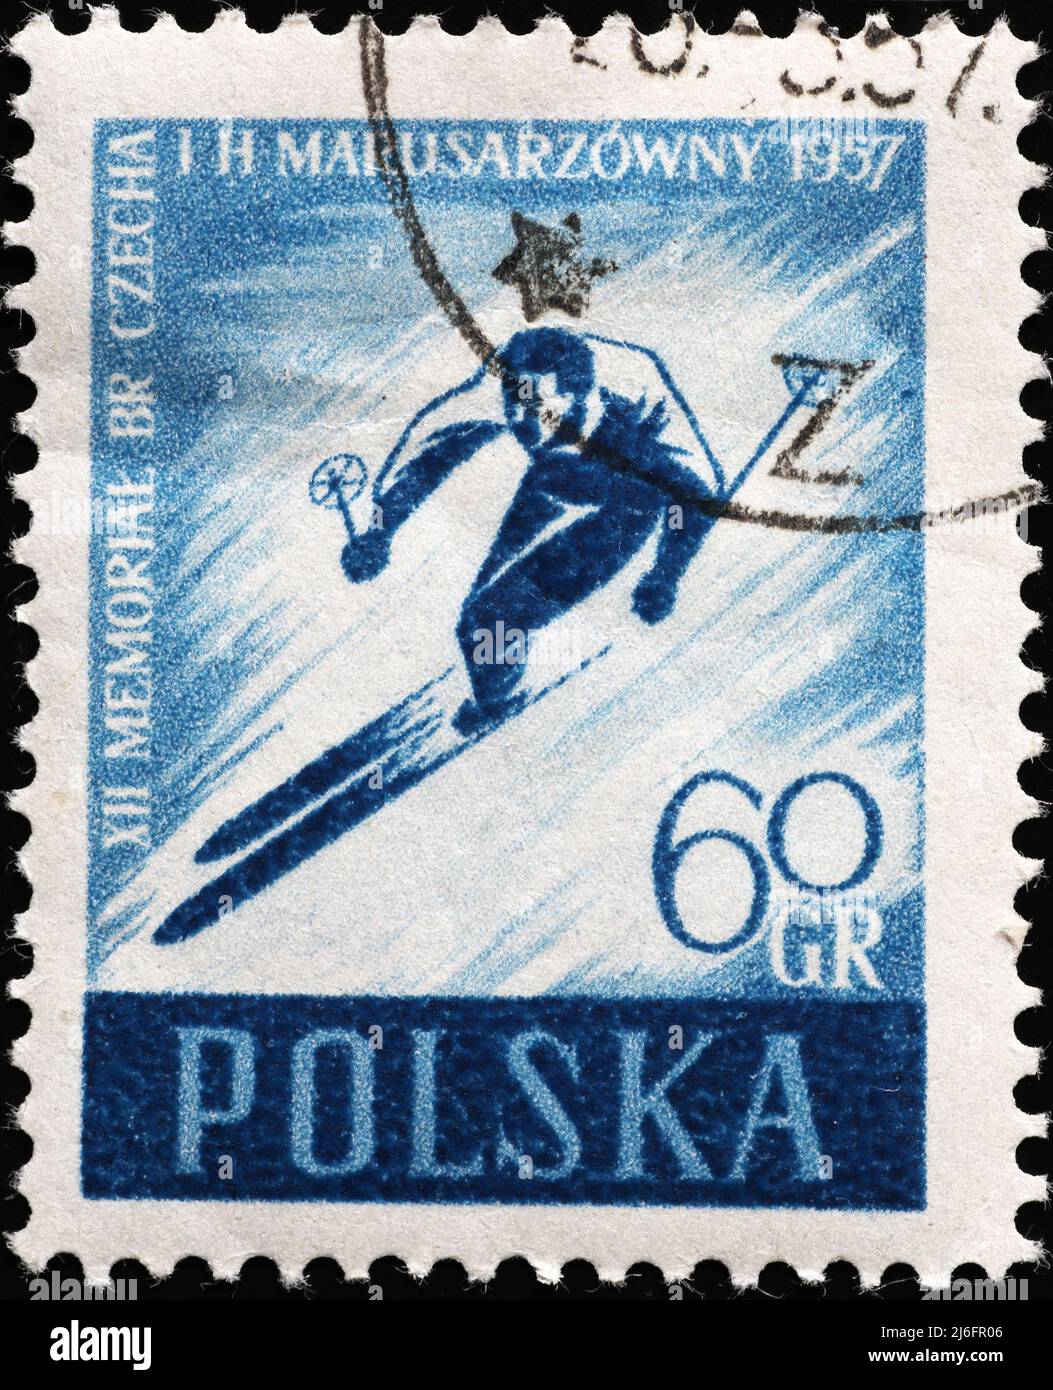 Skier on vintage polish postage stamp Stock Photo